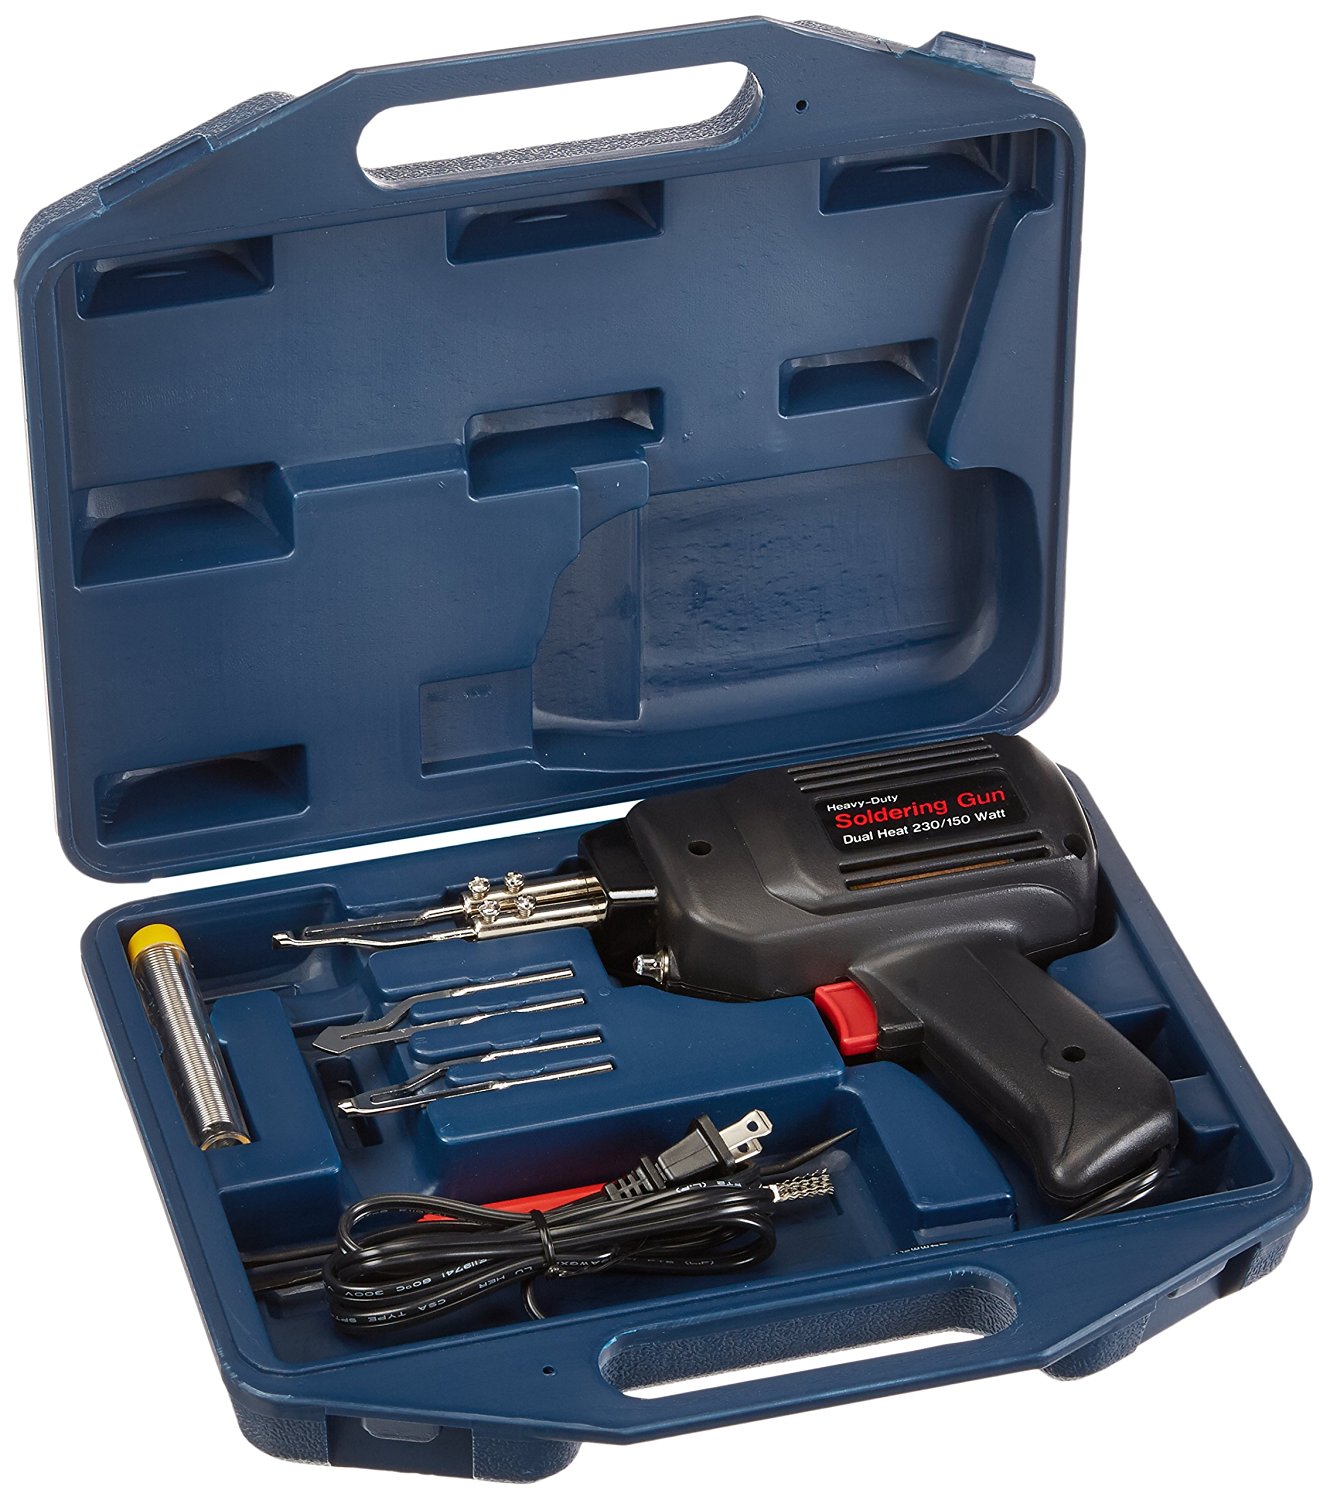 120V Dual Heat Soldering Gun Kit 150W/230W - 8 Piece Maintenance Supplies - Cleanflow